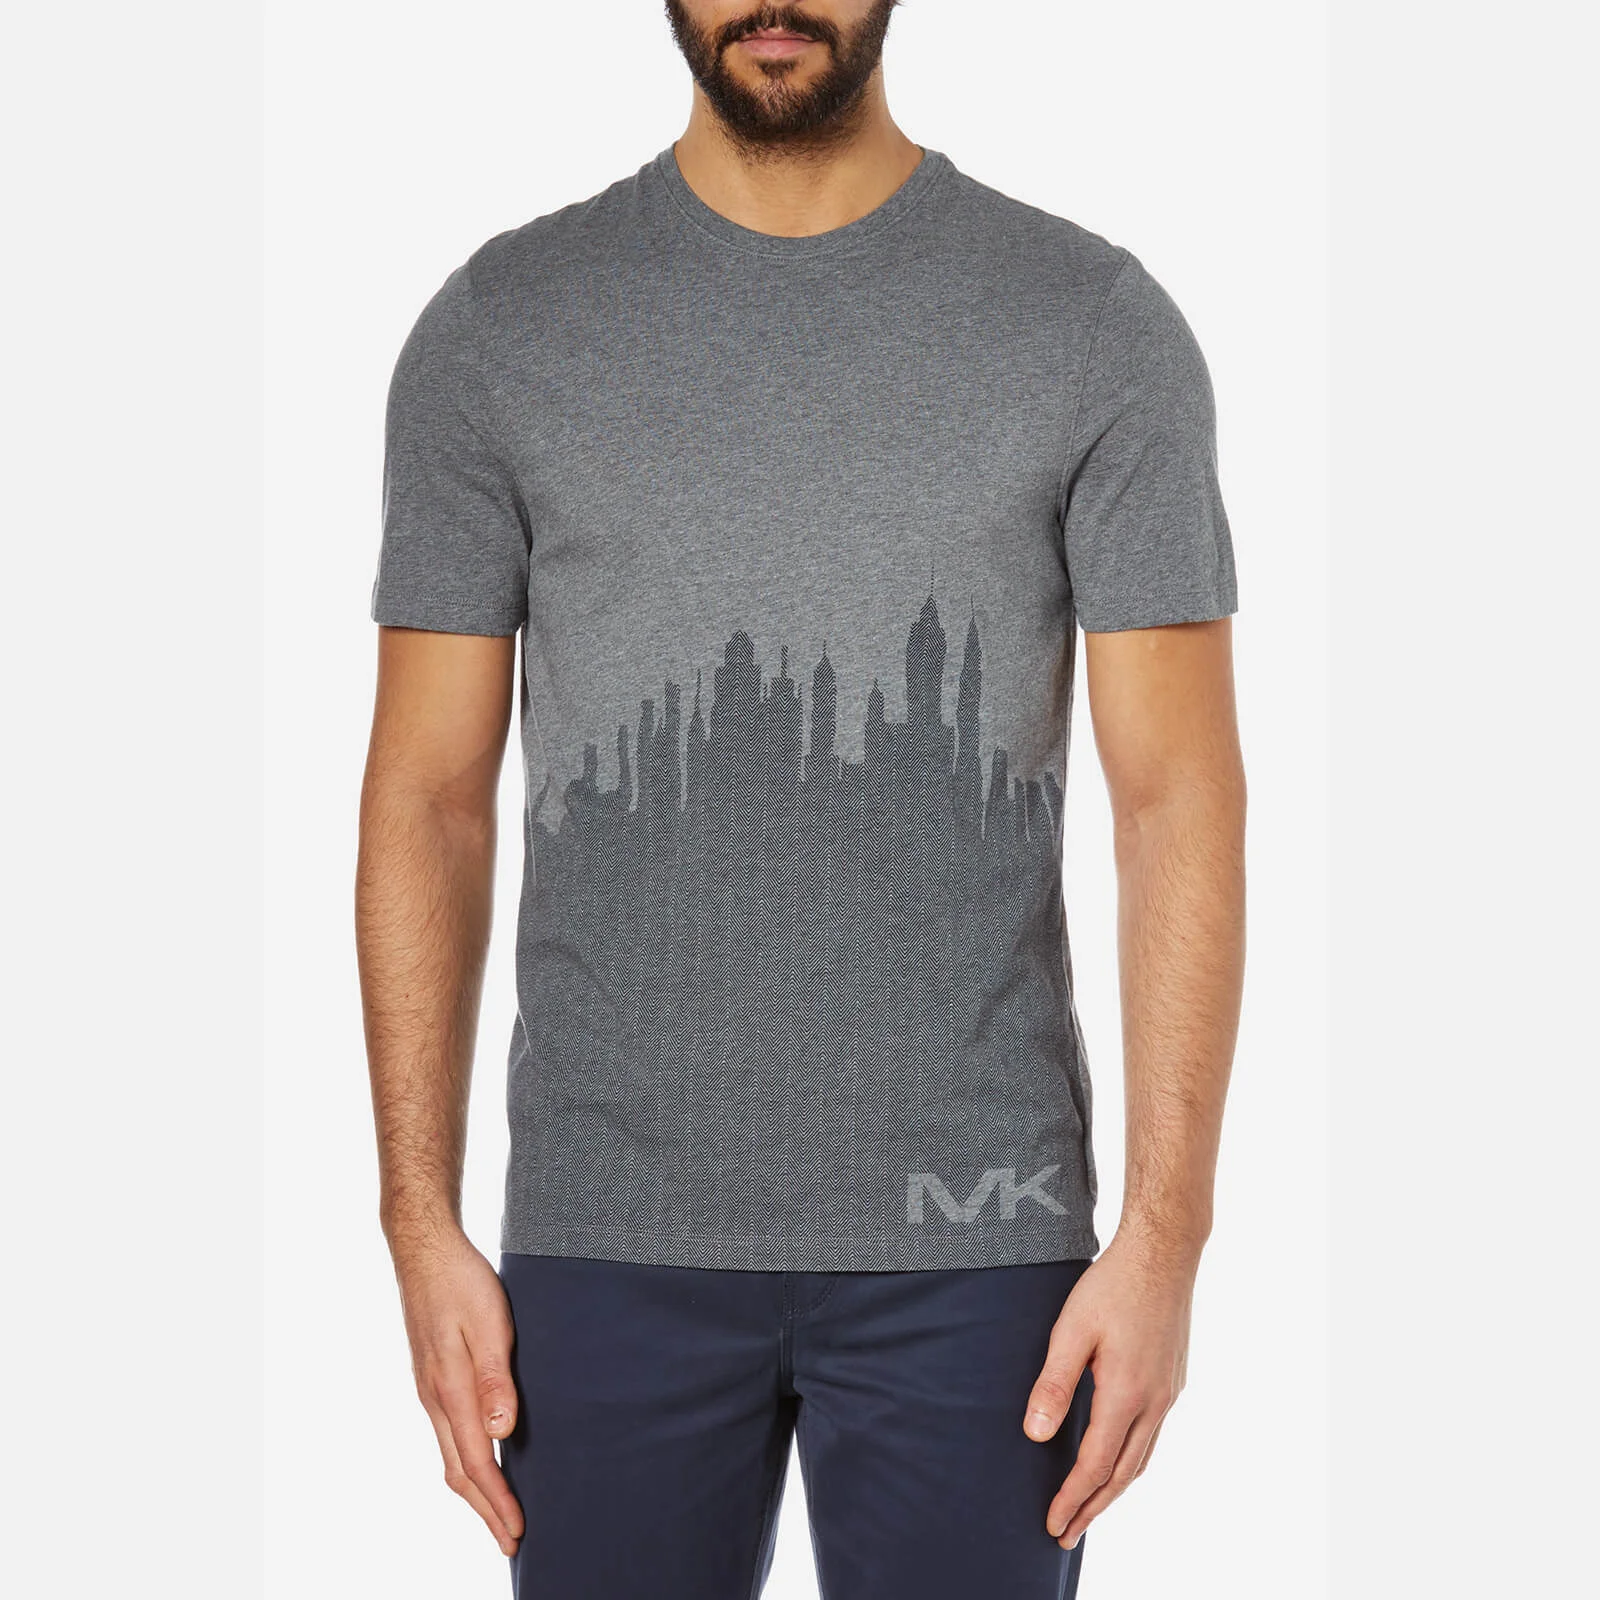 Michael Kors Men's Sky View Graphic T-Shirt - Heather Grey Image 1